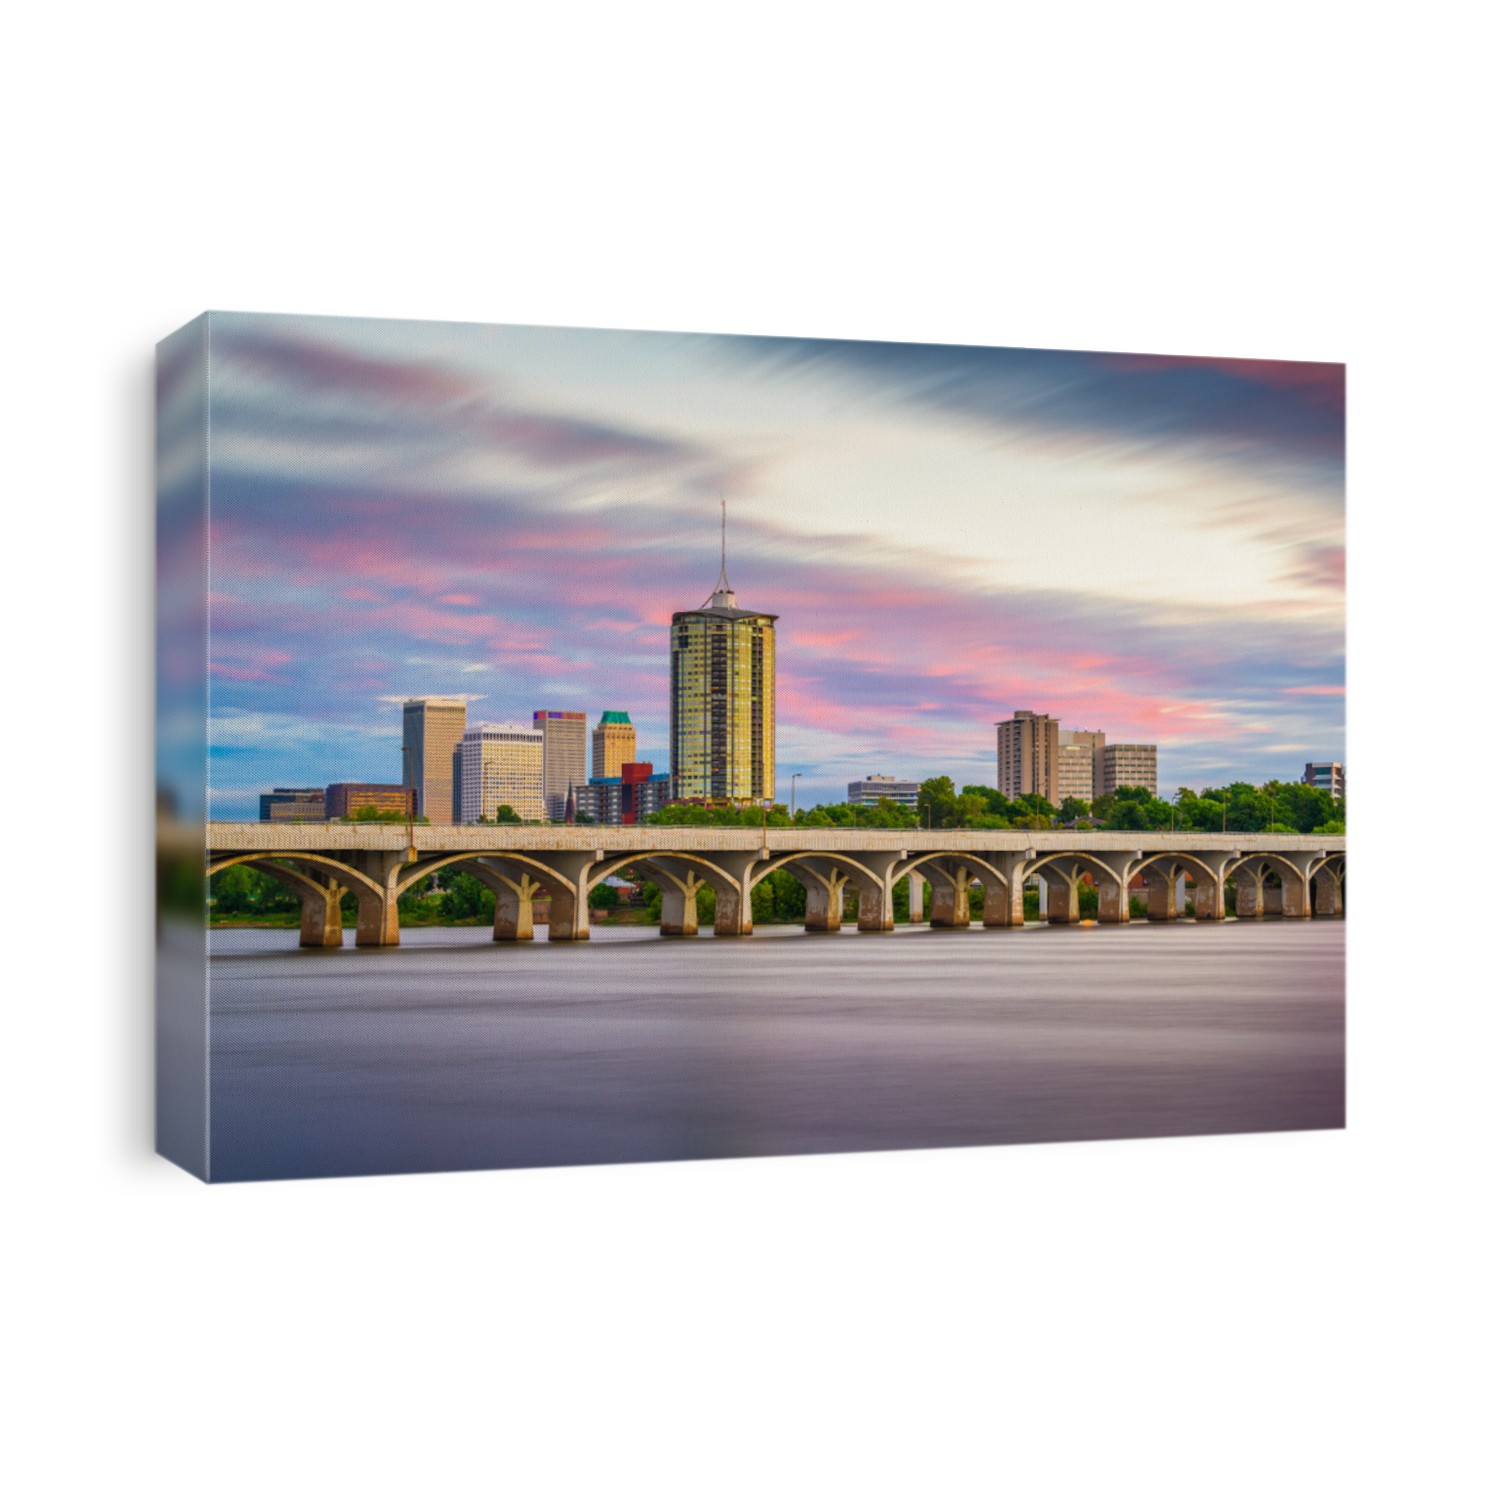 Tulsa, Oklahoma, USA downtown skyline on the Arkansas River at dusk. 